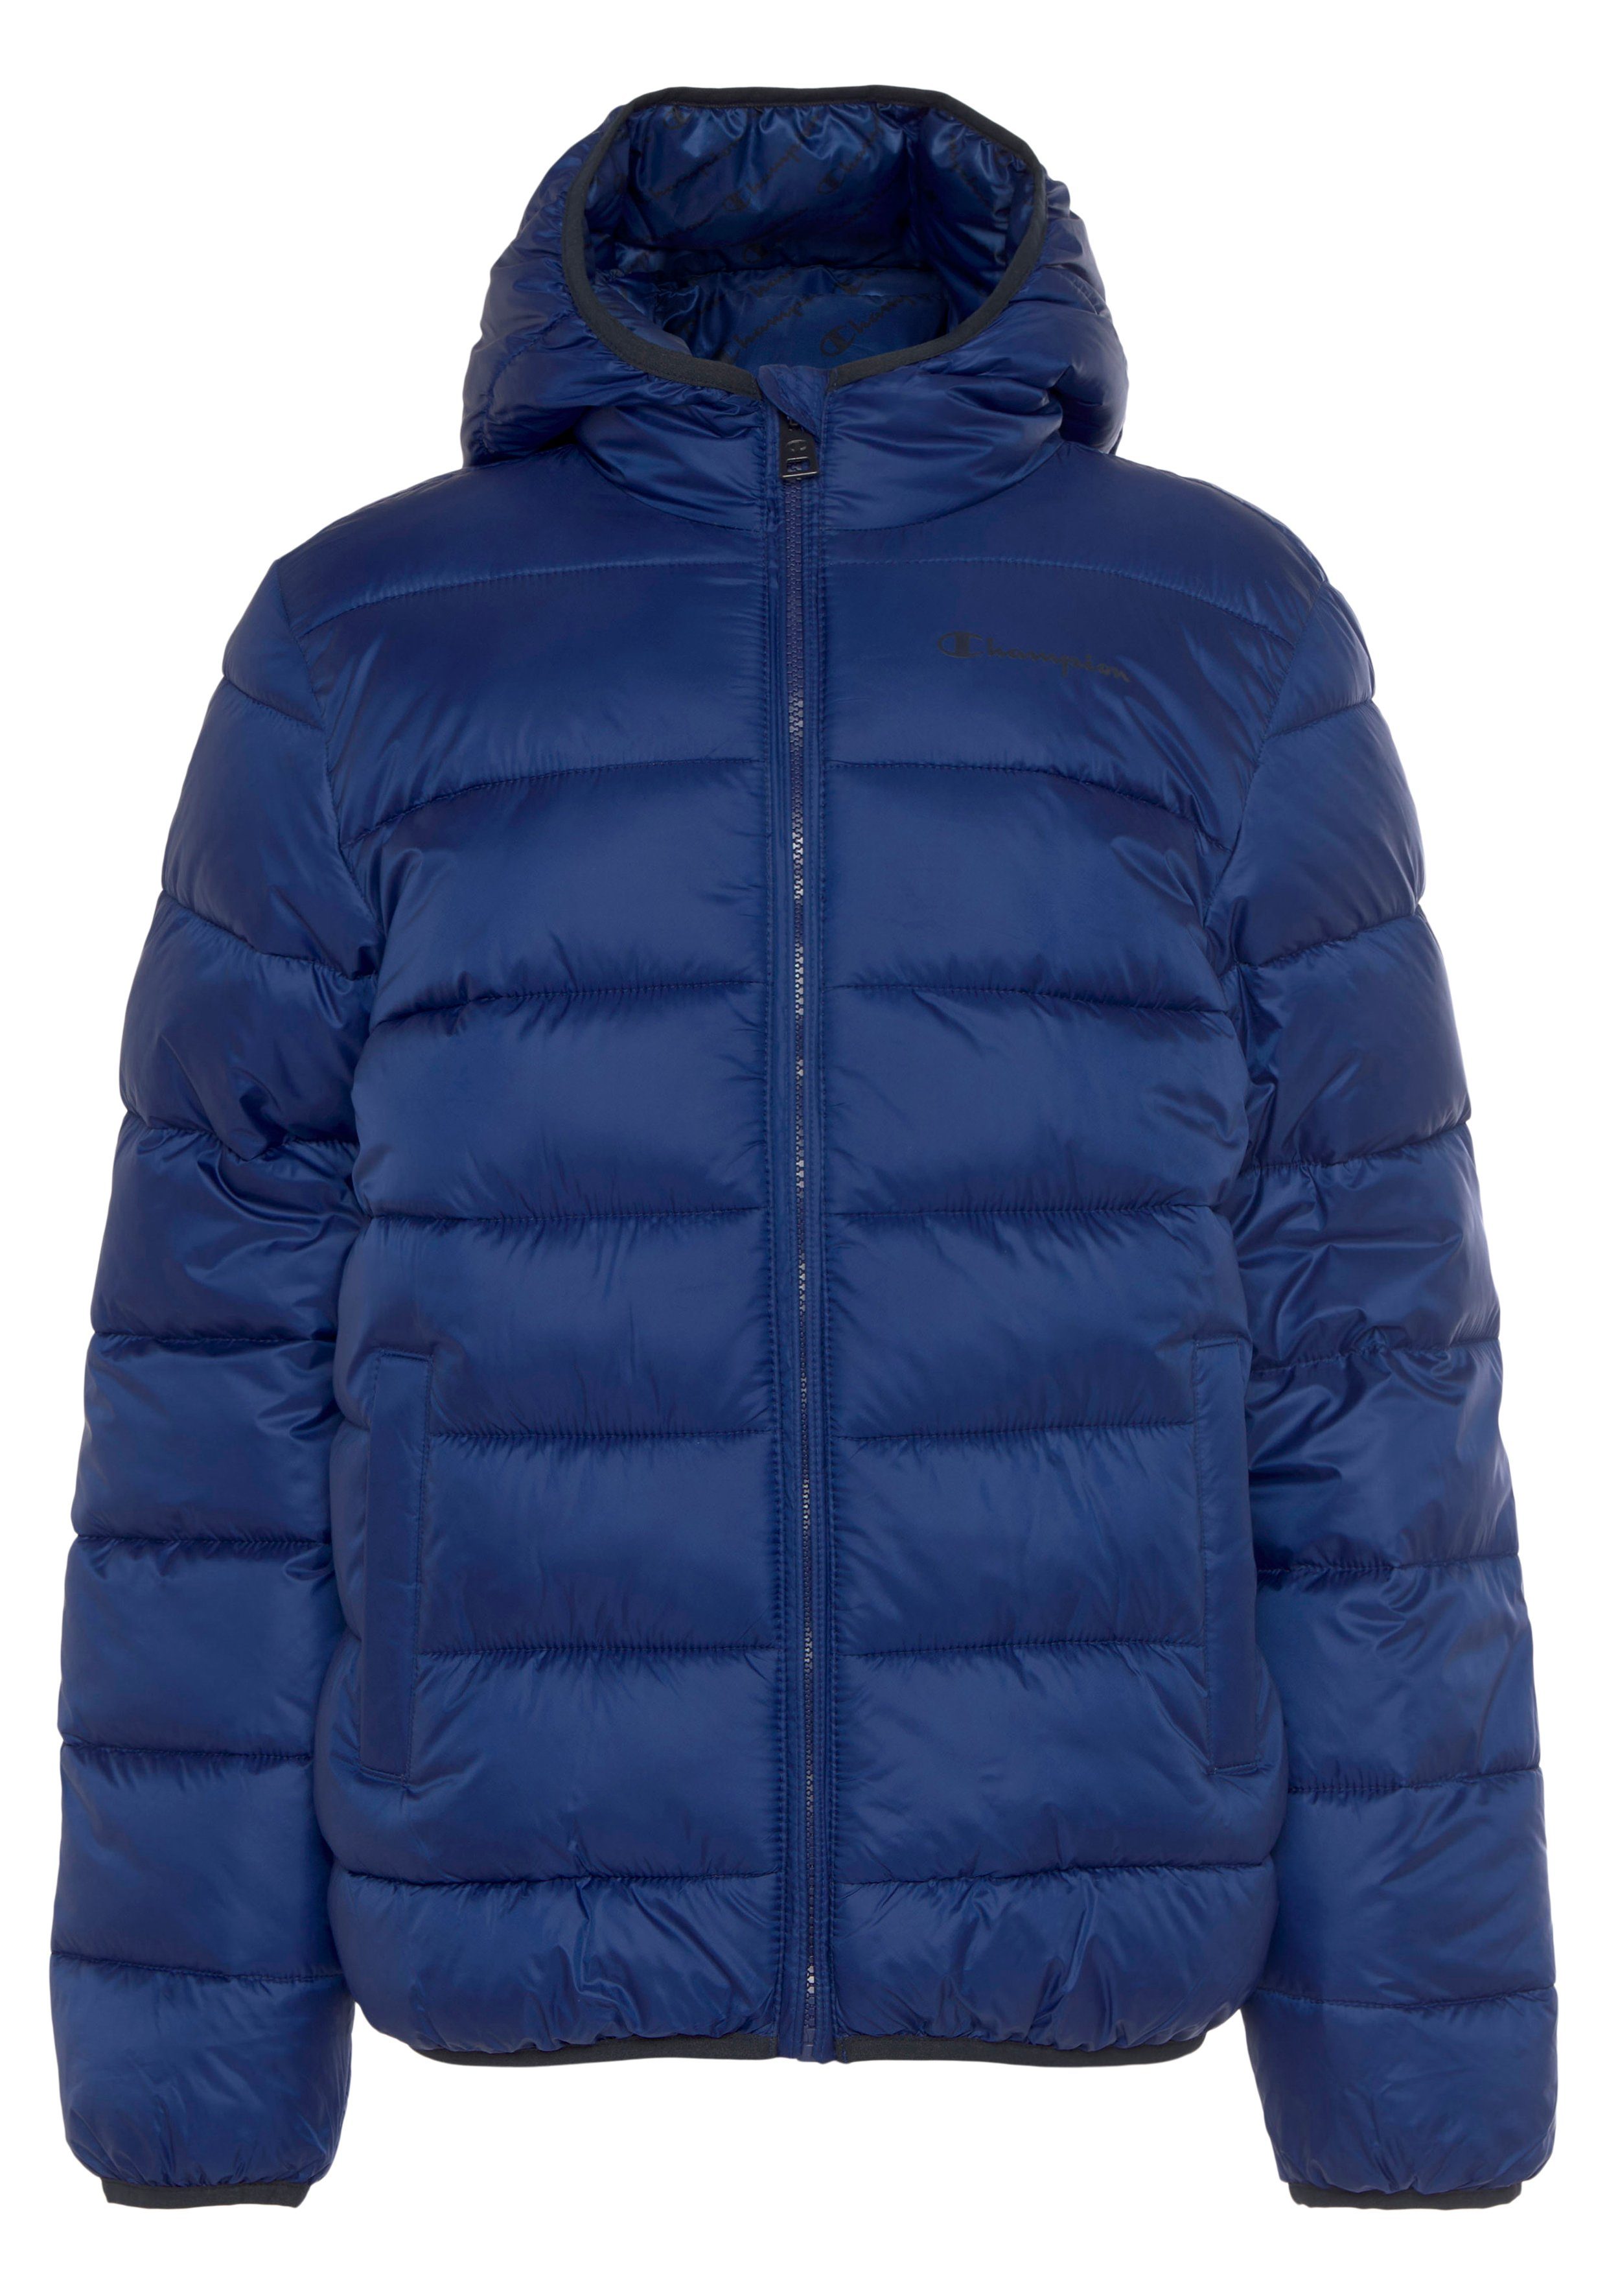 Champion Steppjacke Outdoor Hooded Jacket - für Kinder blau